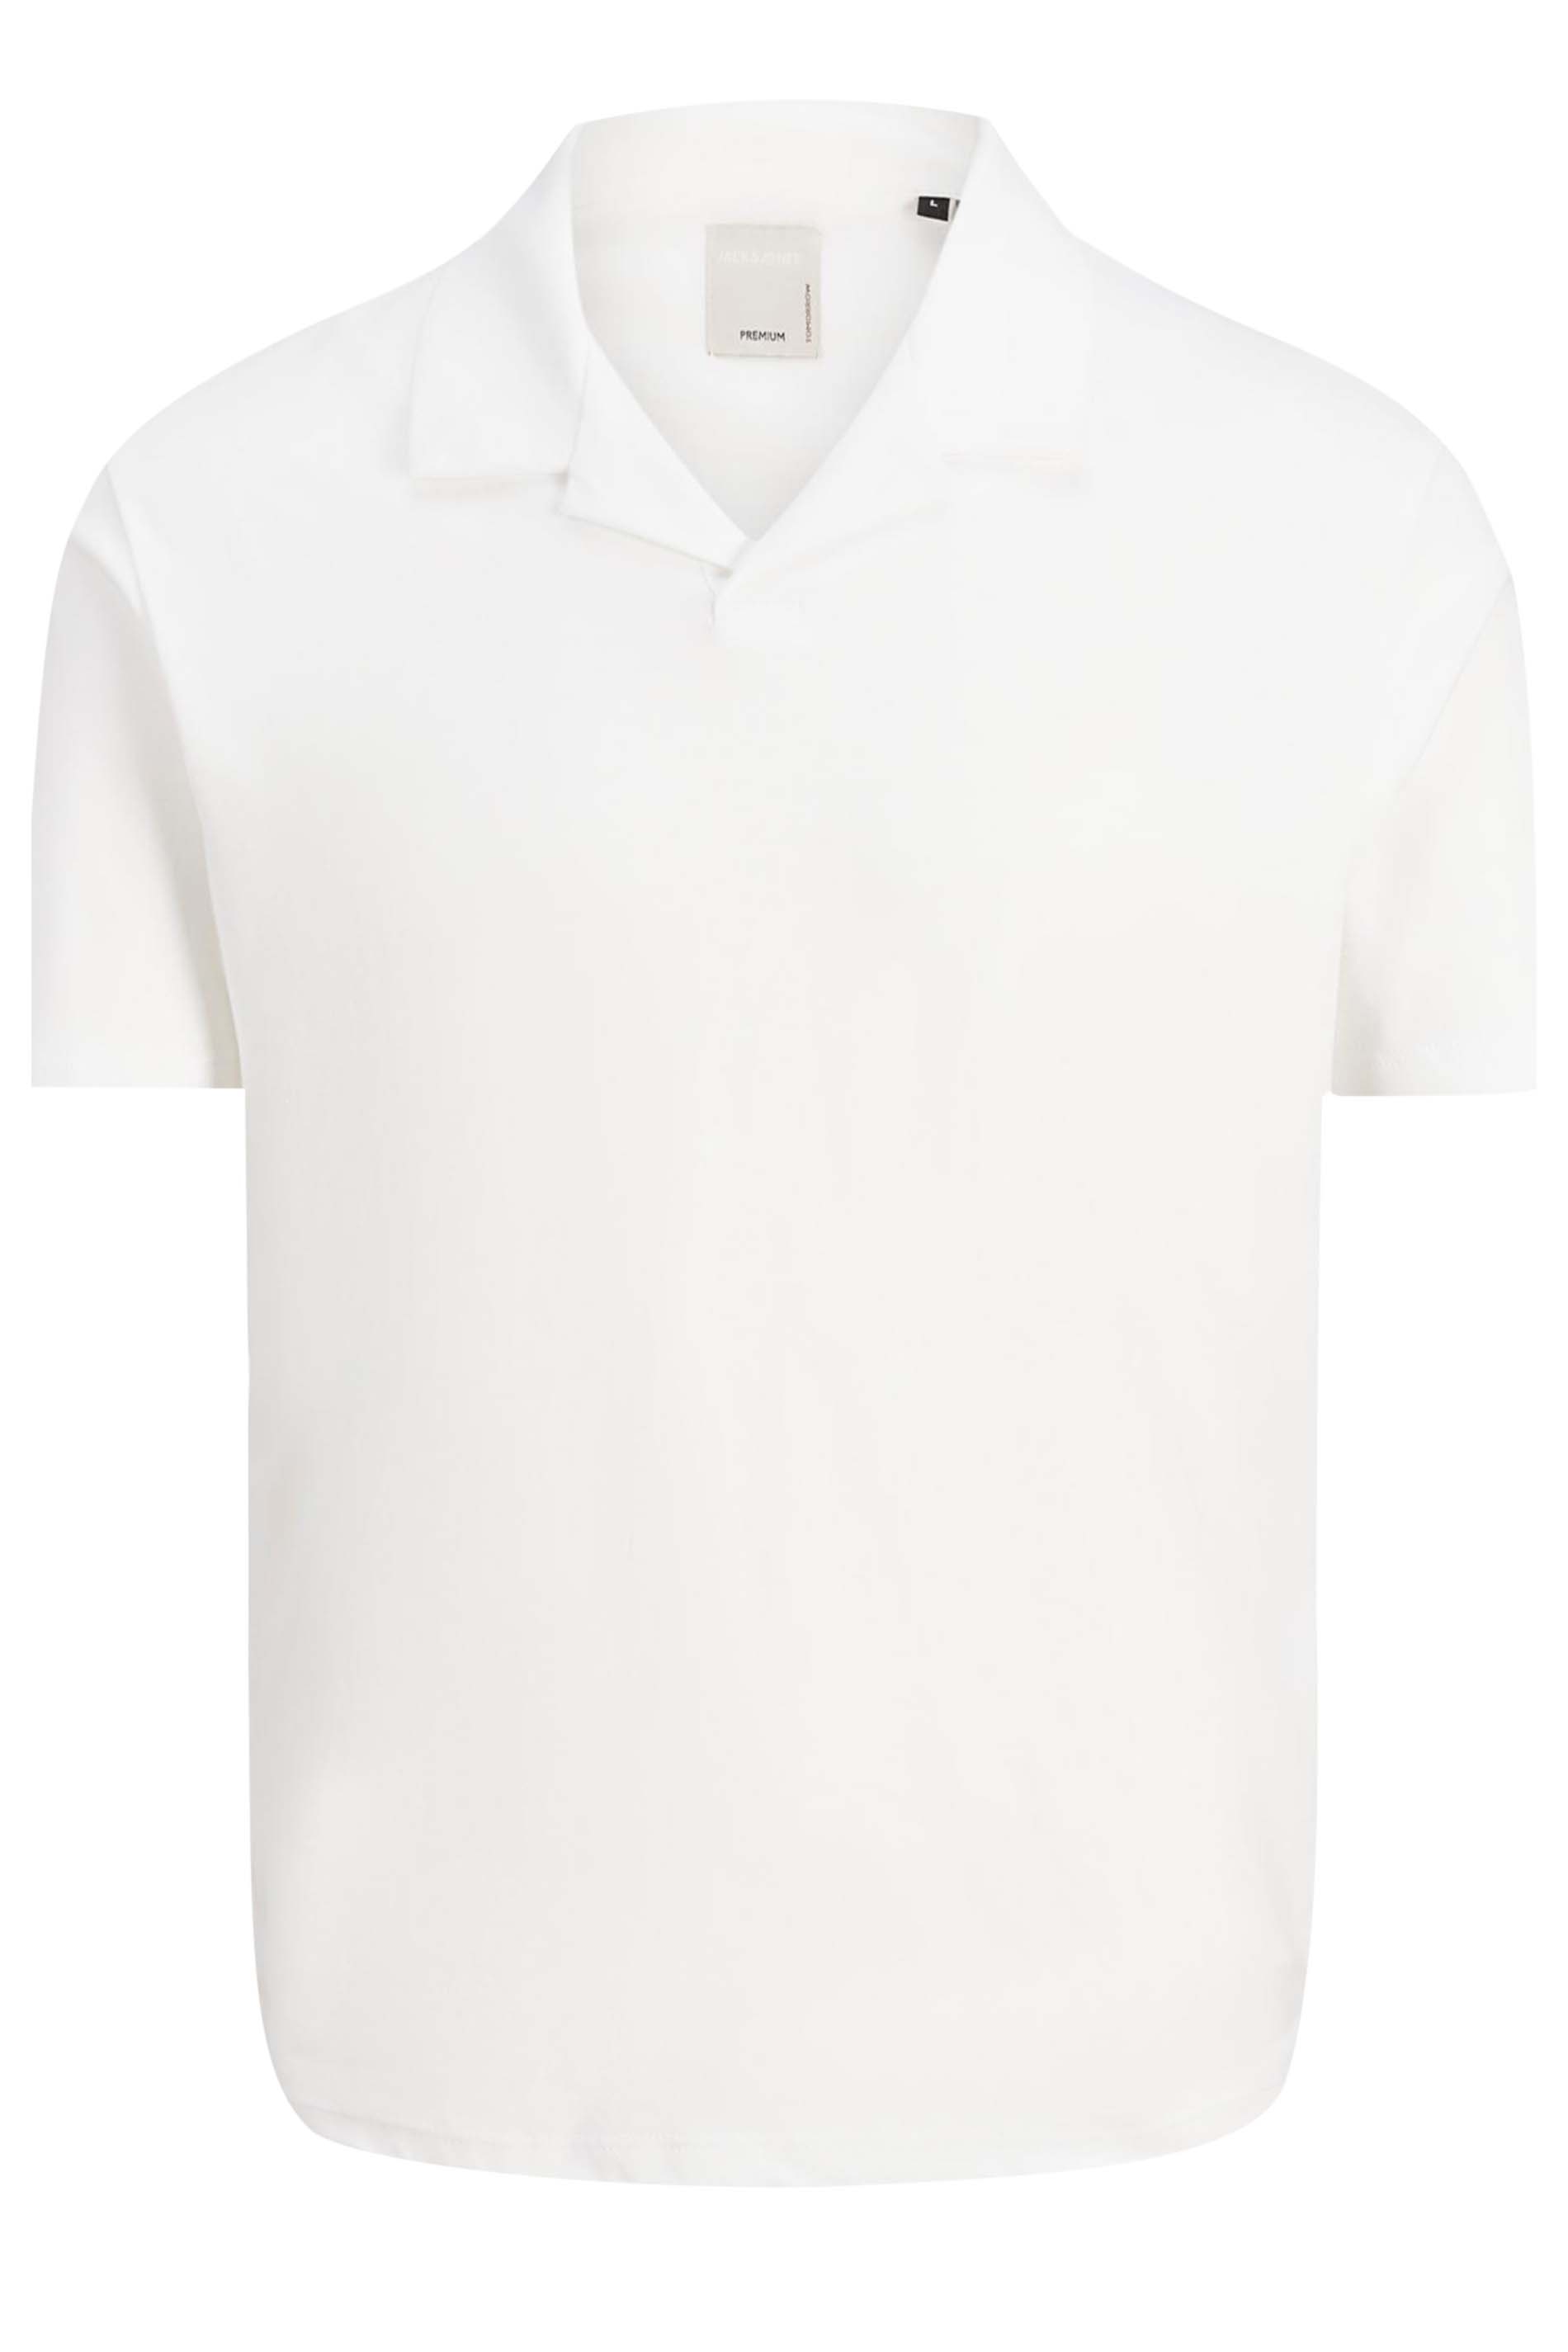 JACK & JONES PREMIUM Big & Tall White Polo Shirt | BadRhino 2